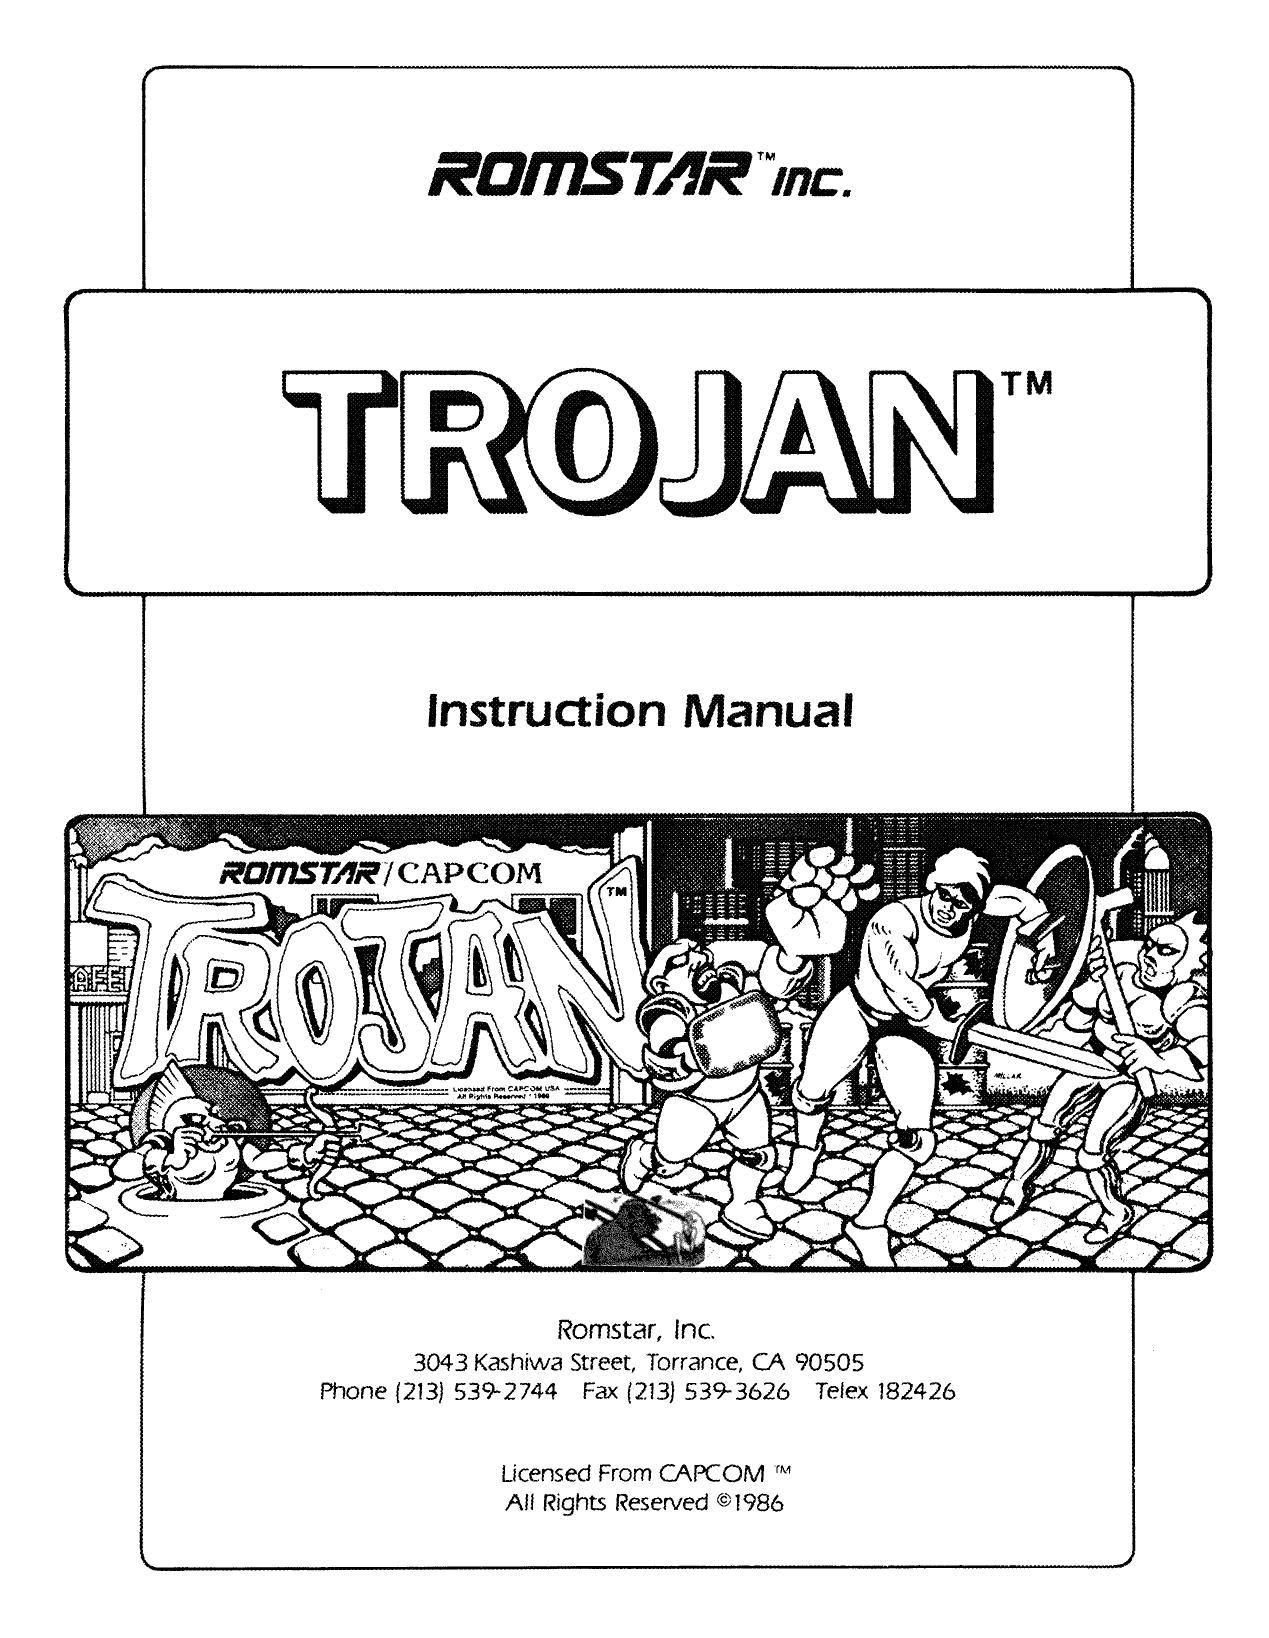 Trojan Manual